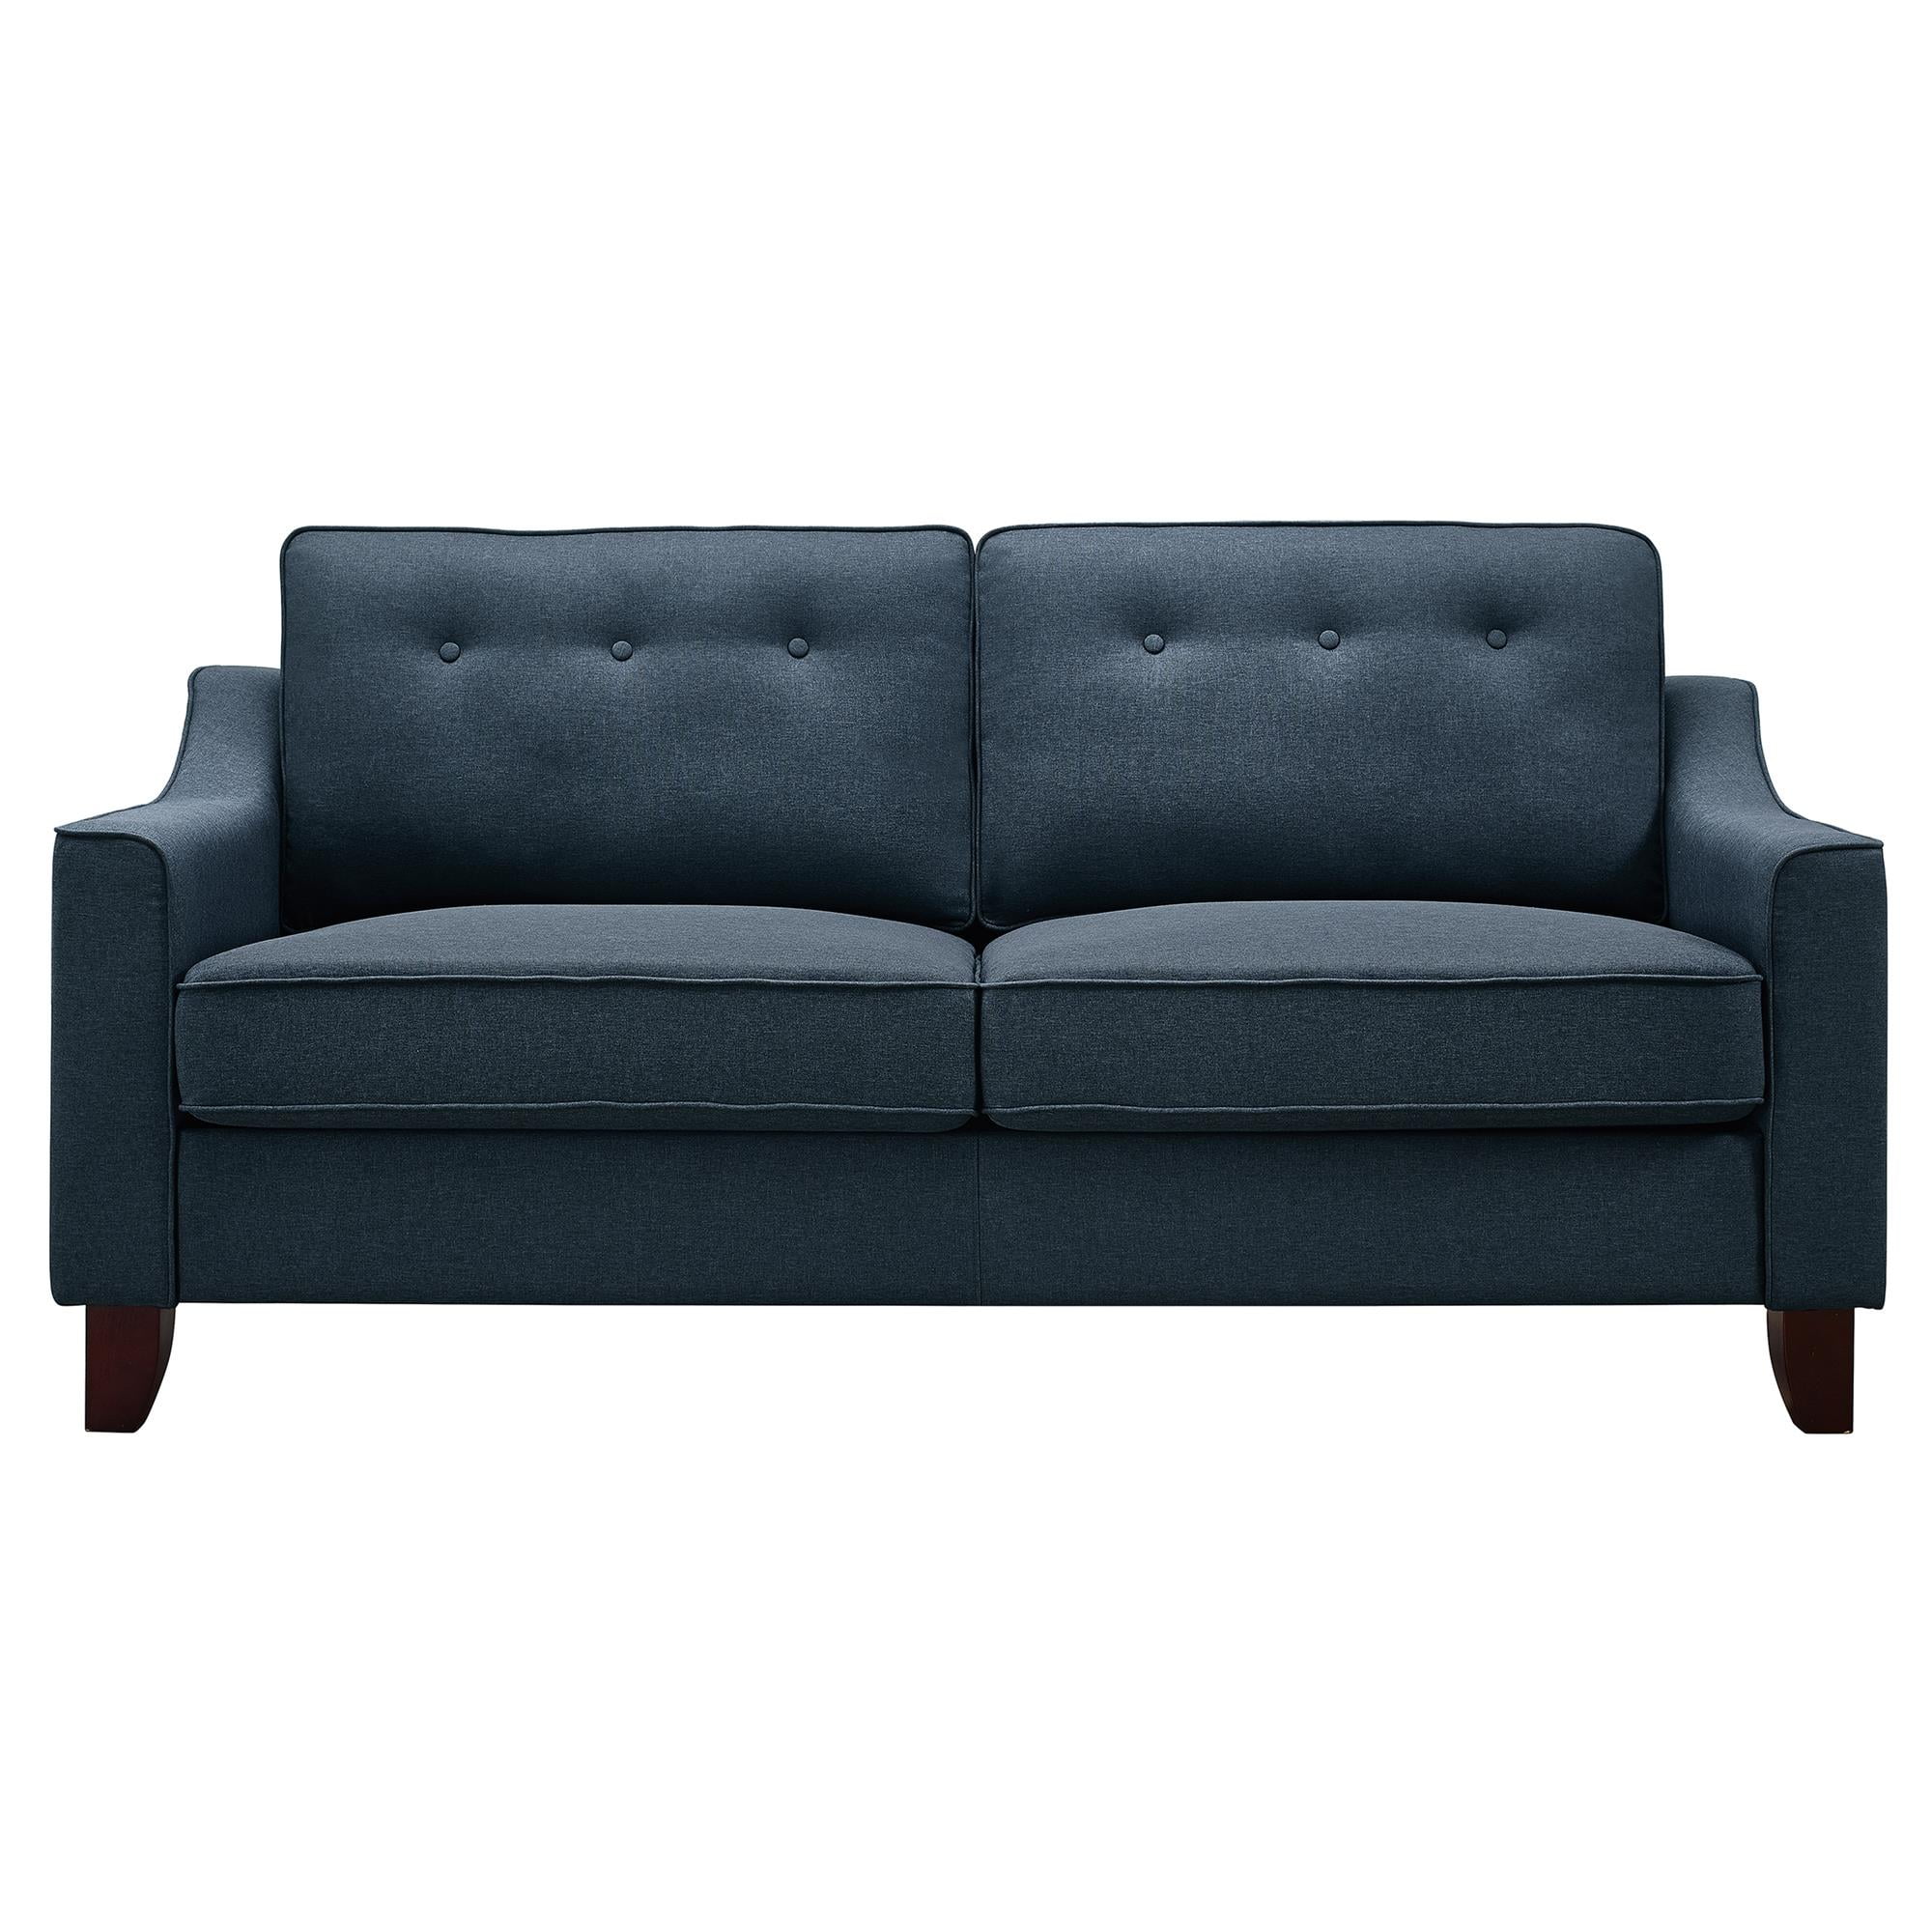 REALROOMS Cherri Mid-Century Modern Sofa Living Room Couch Beige